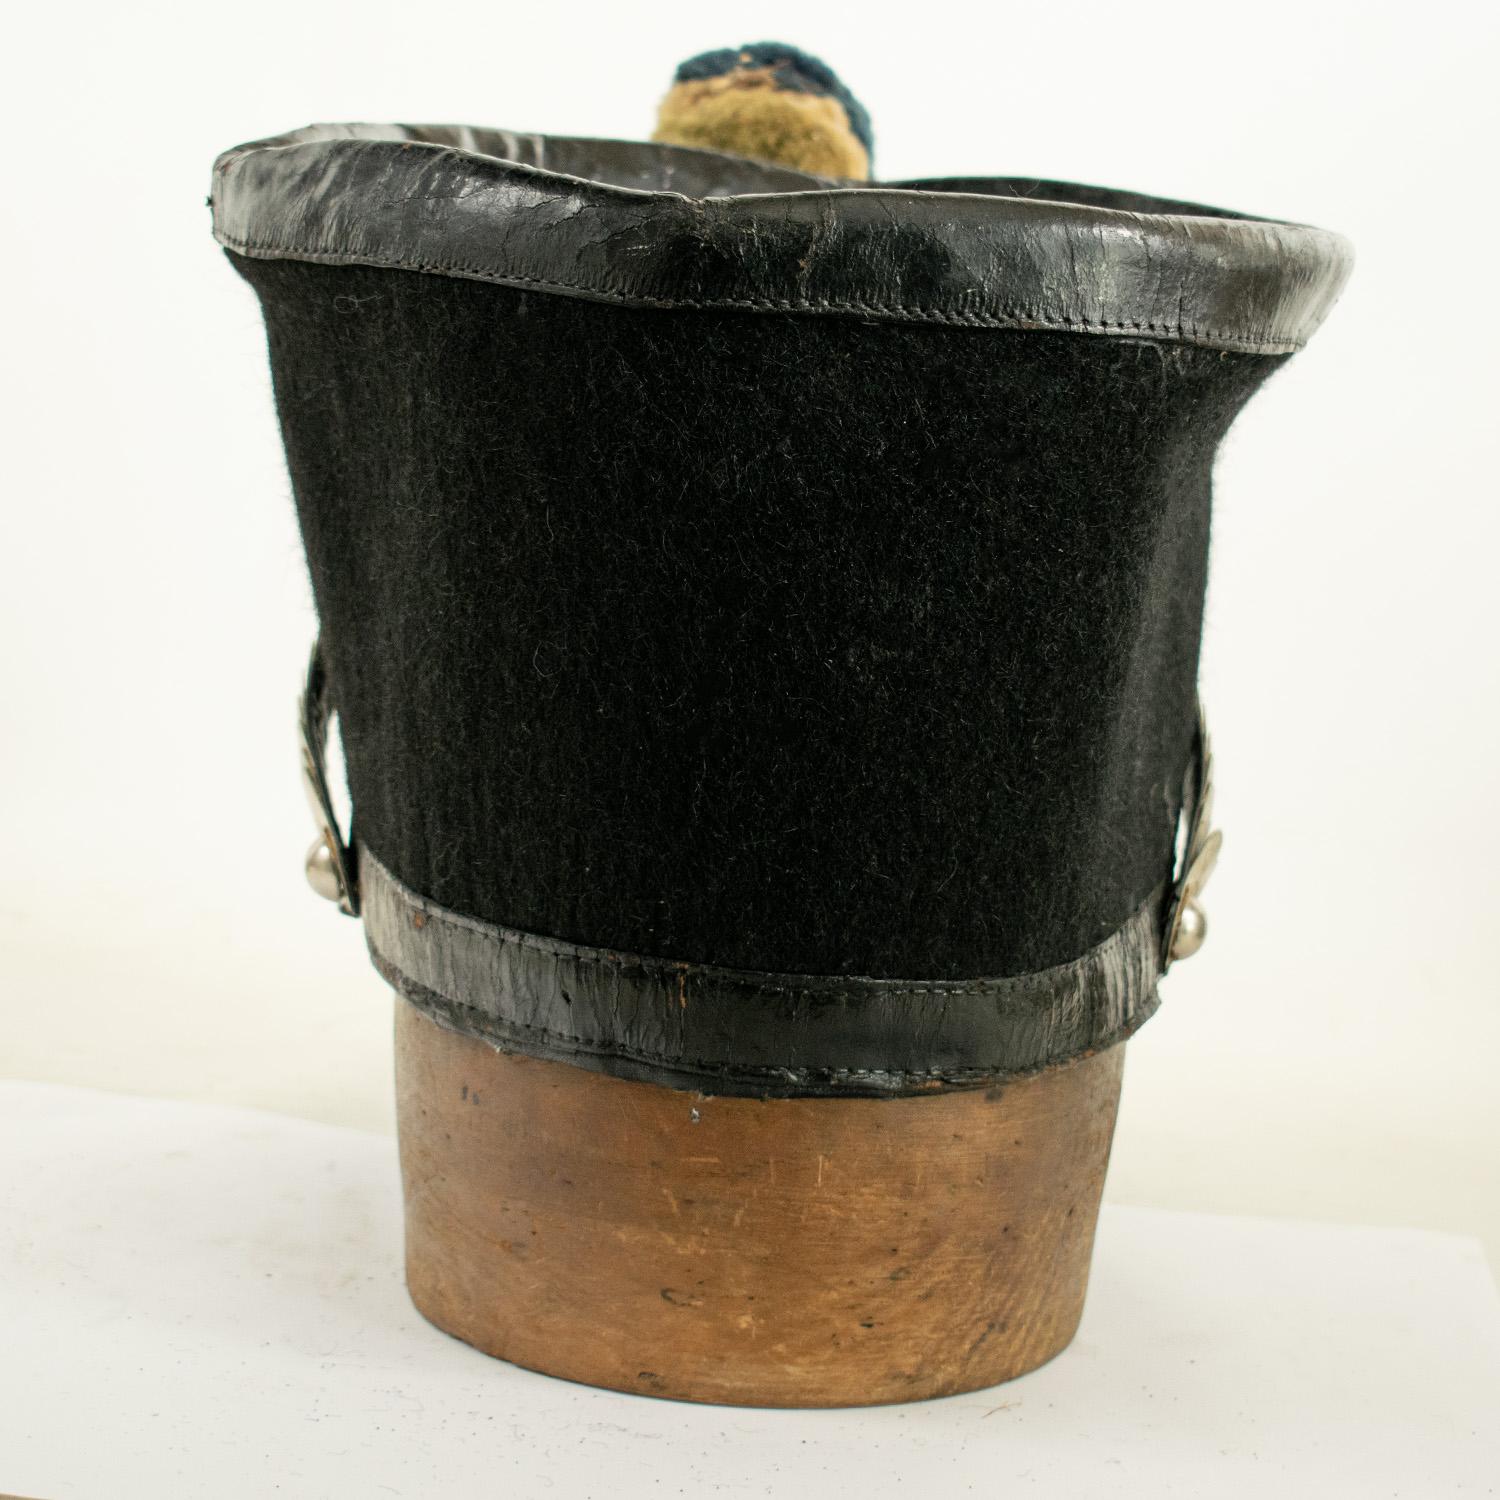 Rare SWISS MODEL 1830 BELL TOP SHAKO Helmet to Jaeger Regiment In Fair Condition For Sale In TEYJAT, FR